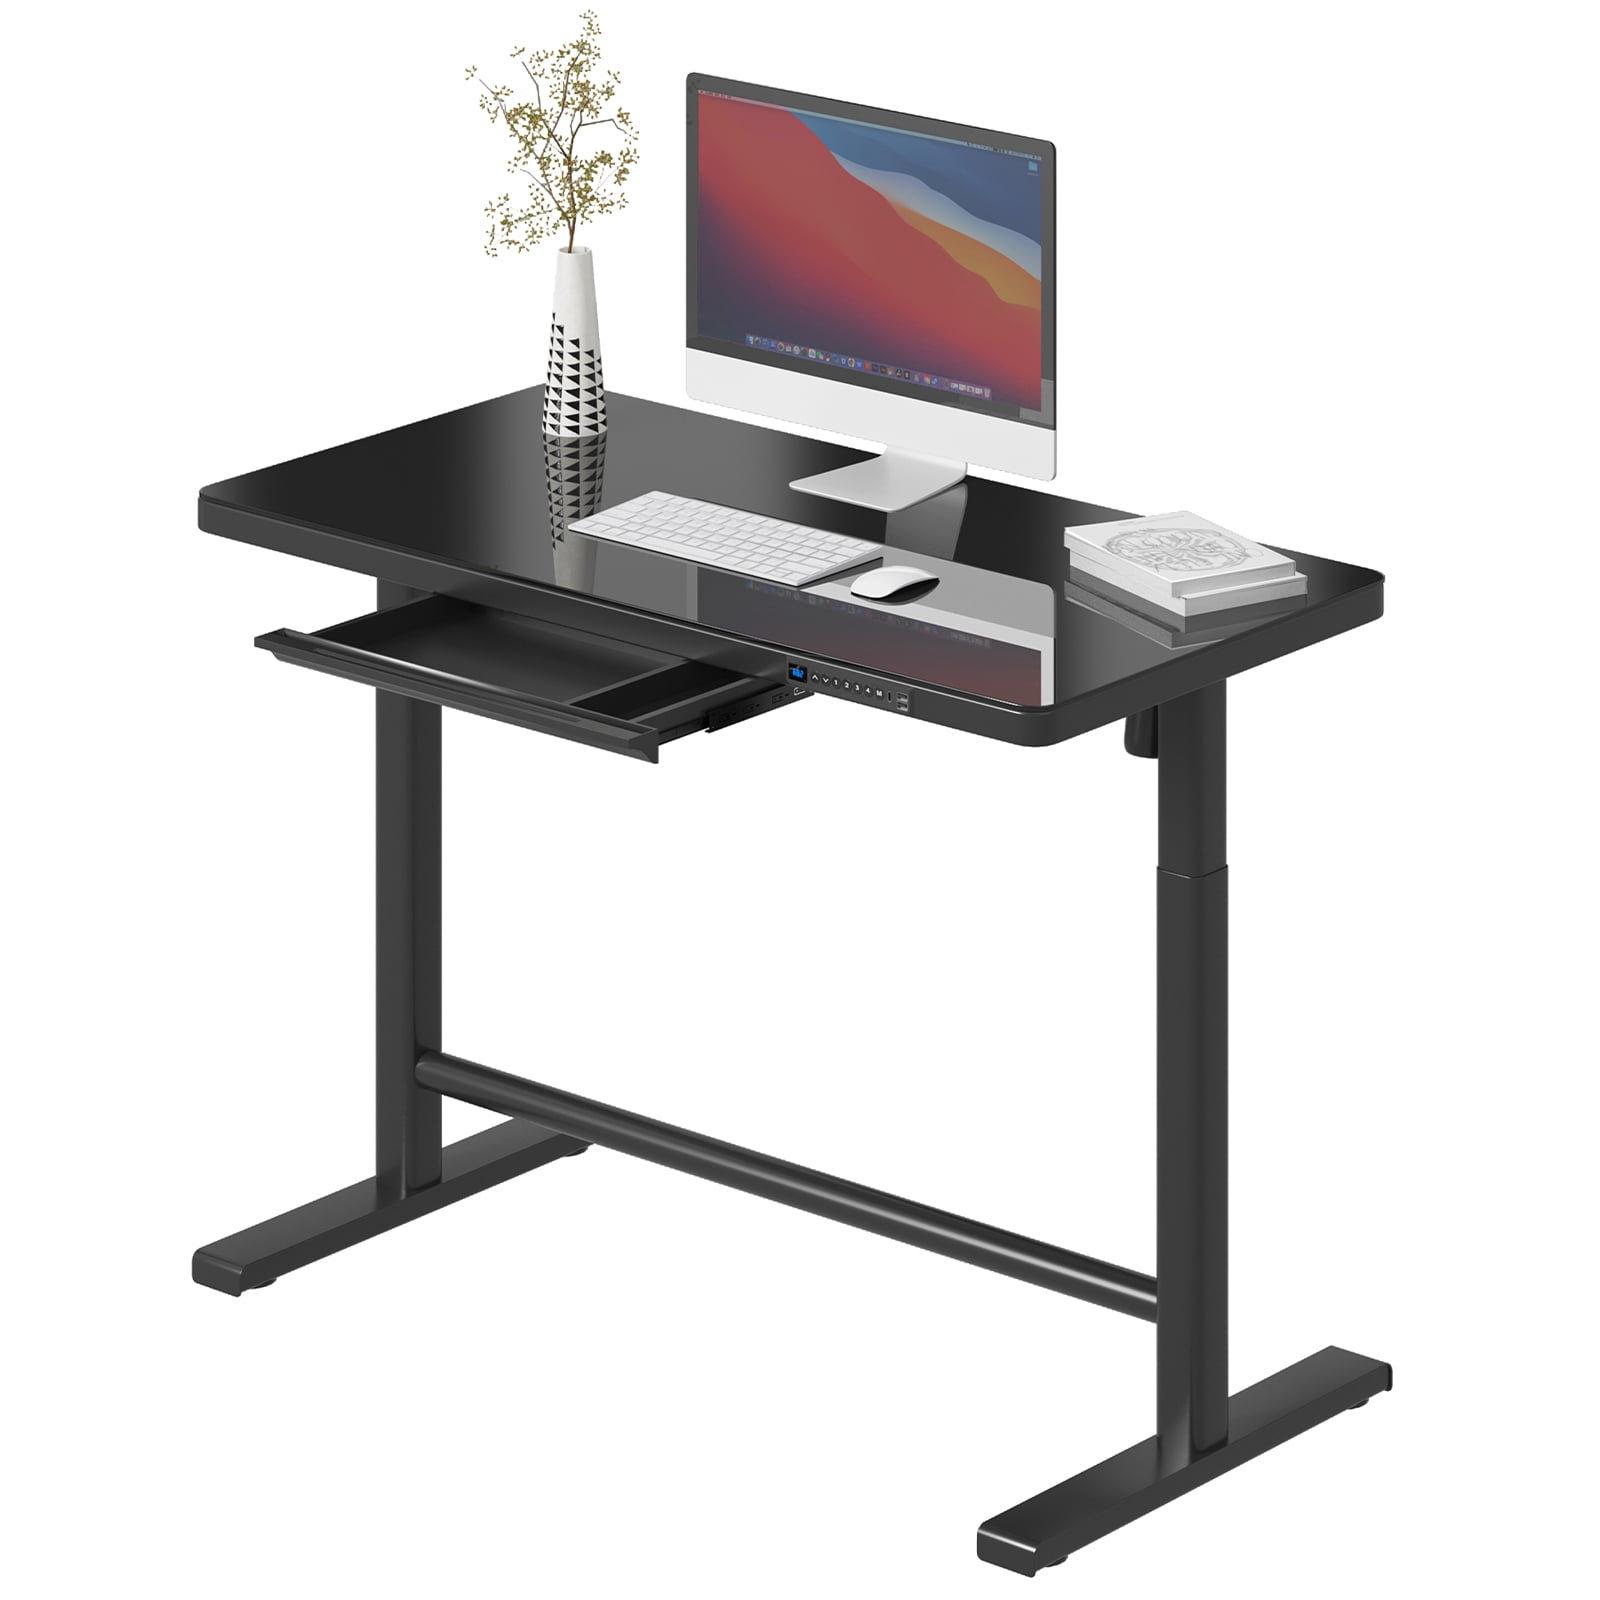 Height Adjustable Desk - Sit Stand Station